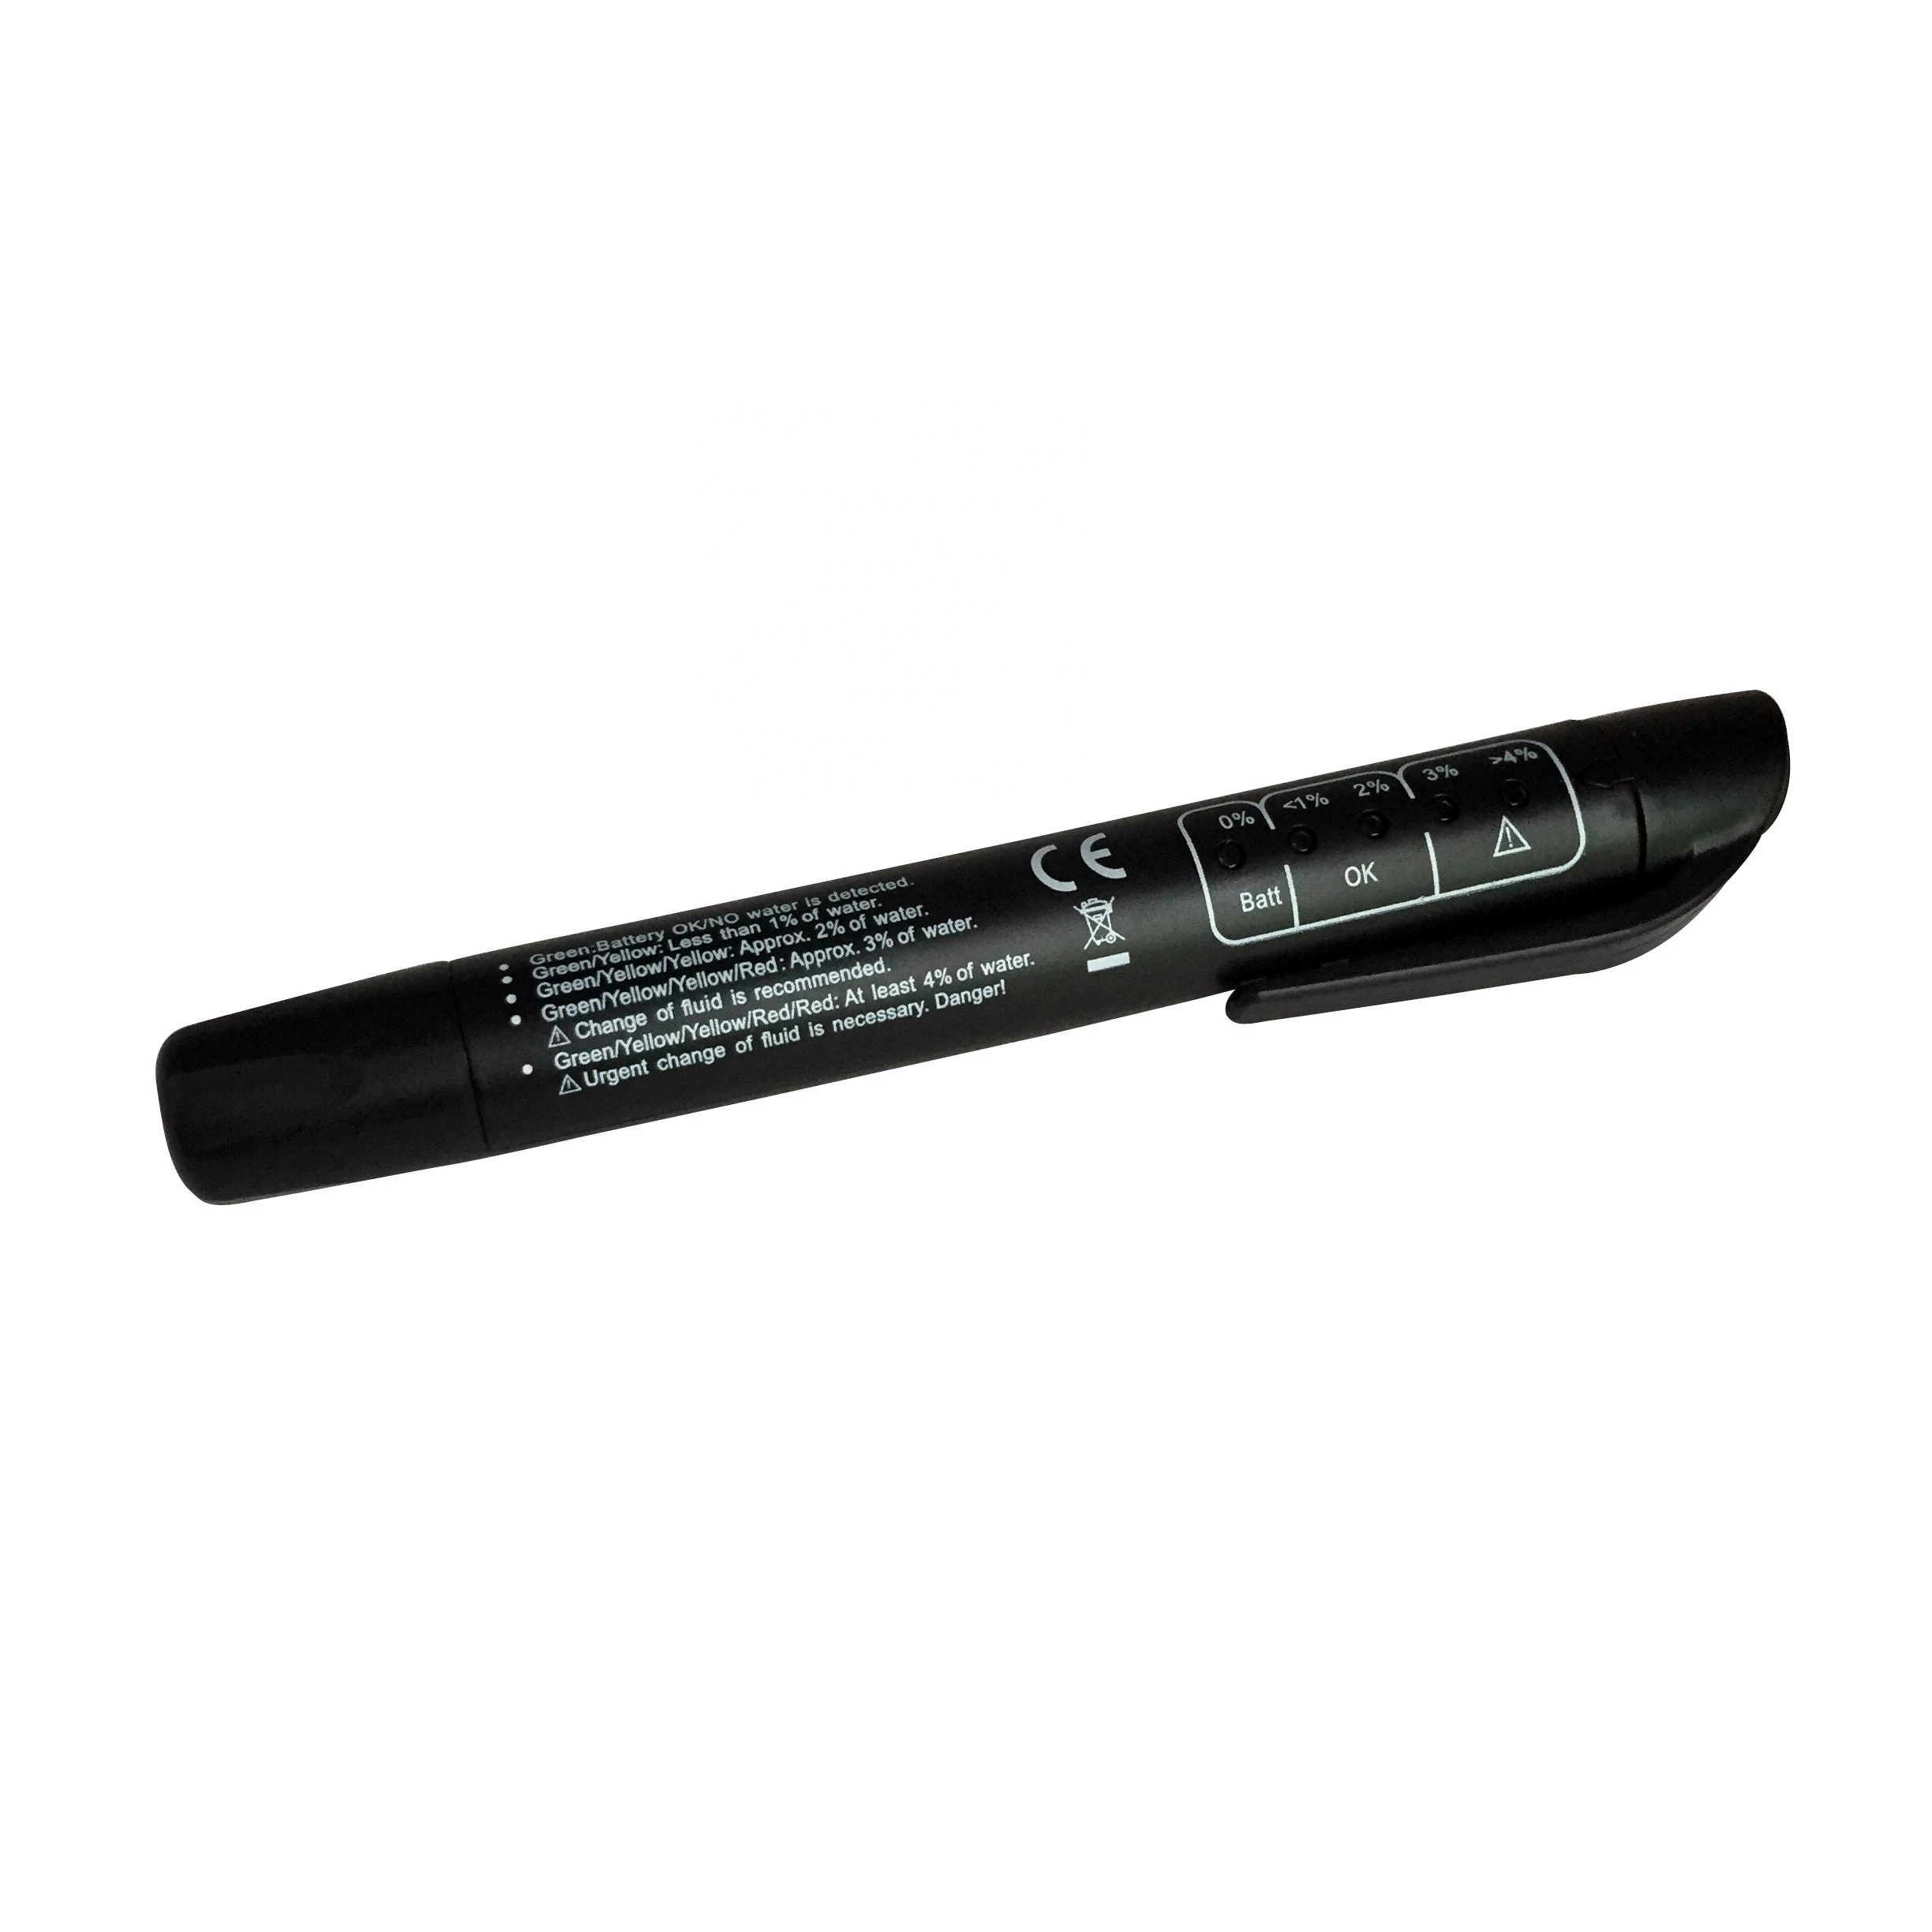 Car Brake Fluid Tester Pen 5 LED Auto Vehicle Automotive Testing Diagnostic Tool Electronic